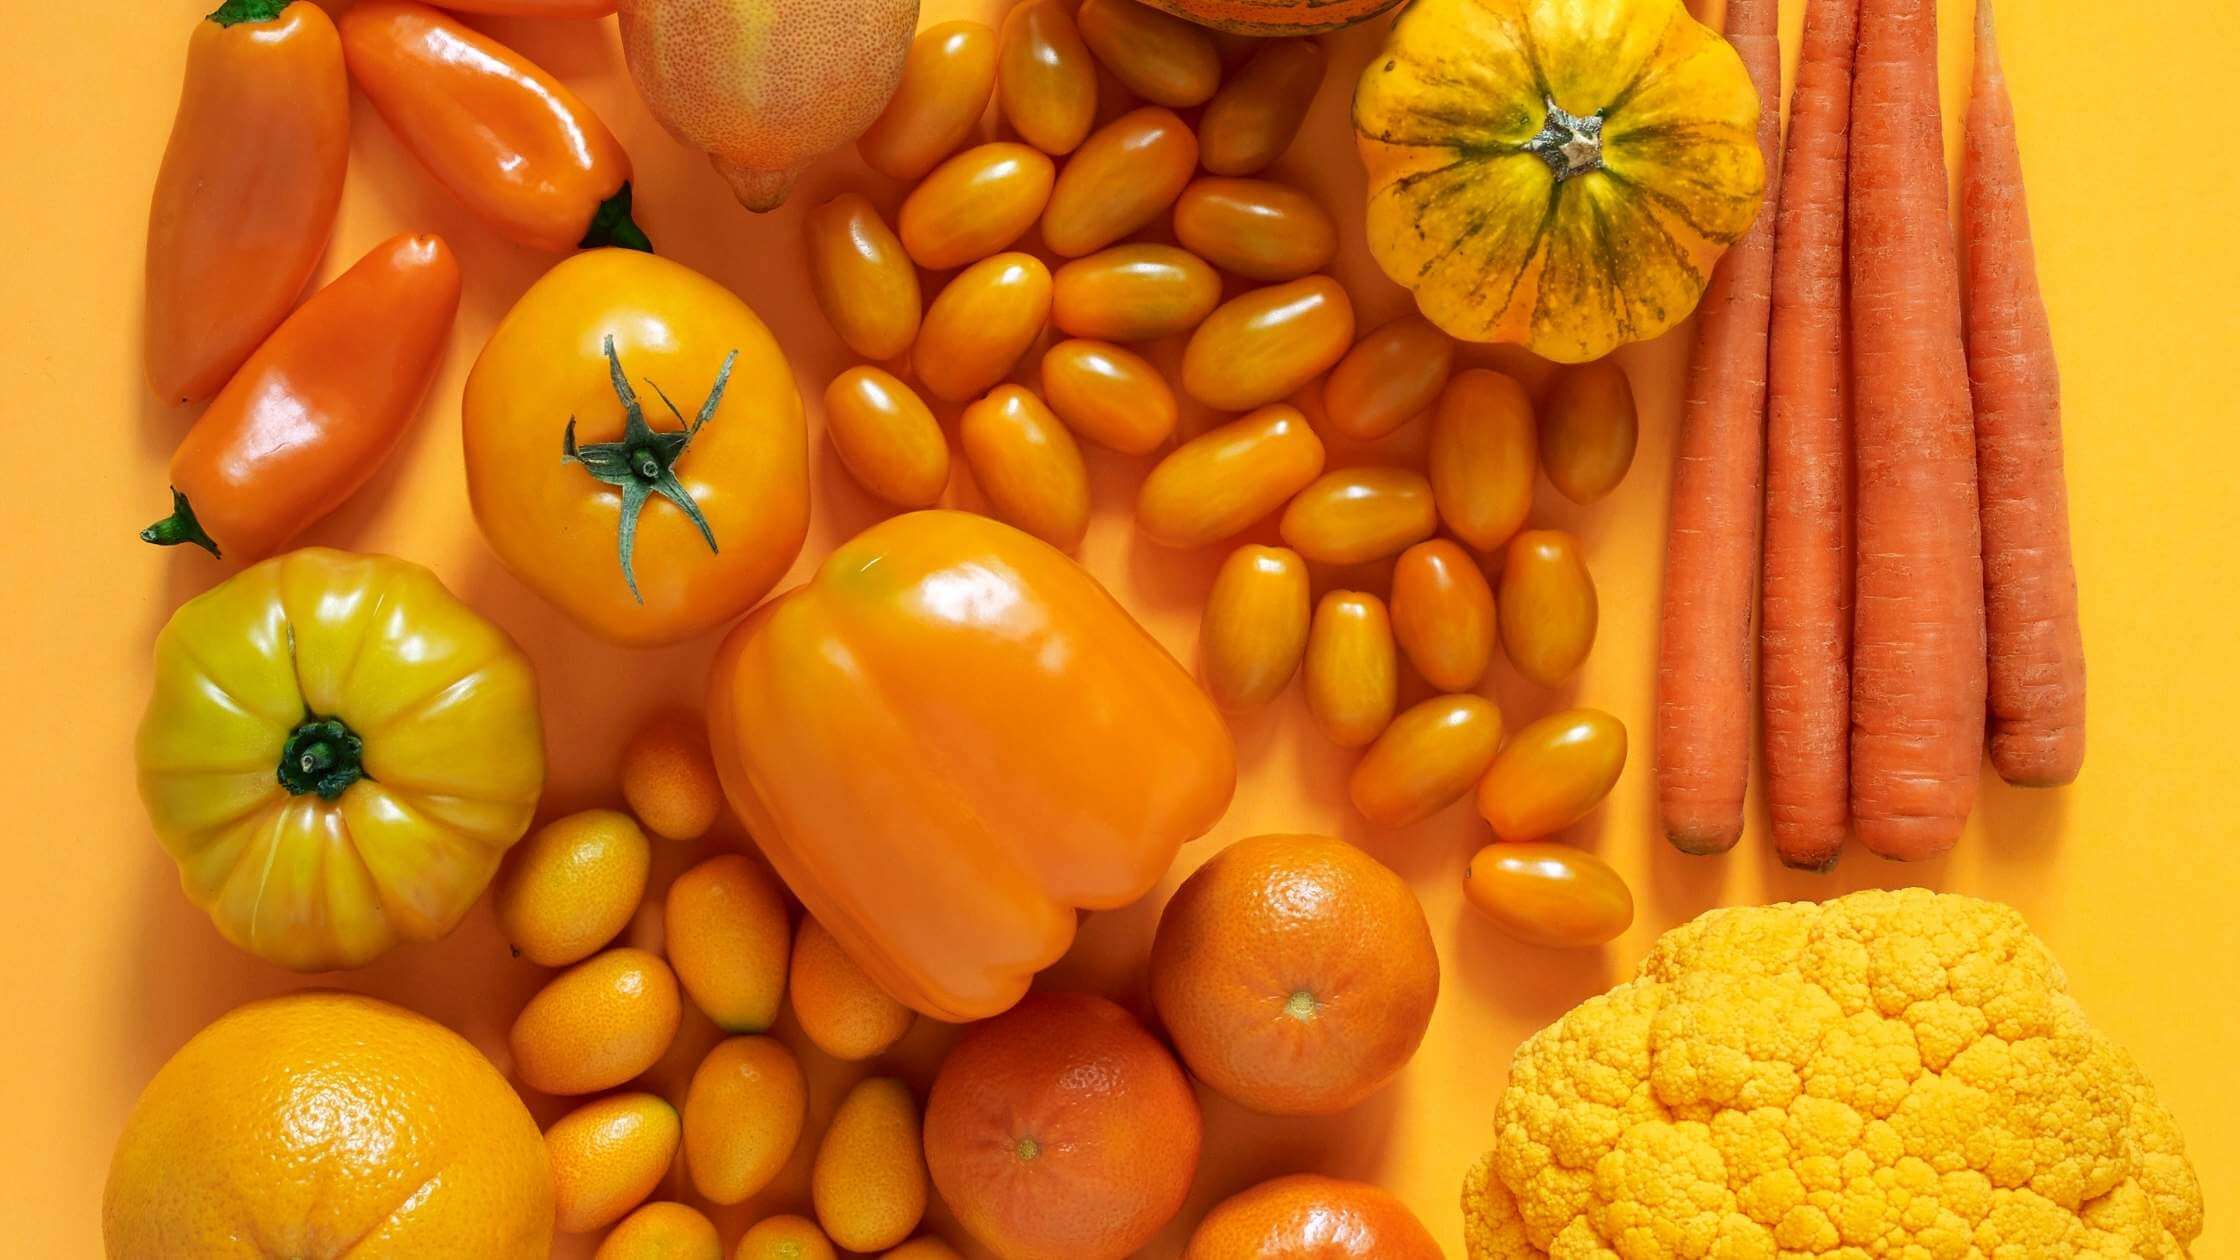 orange fruit and vegetables flatlay on orange background